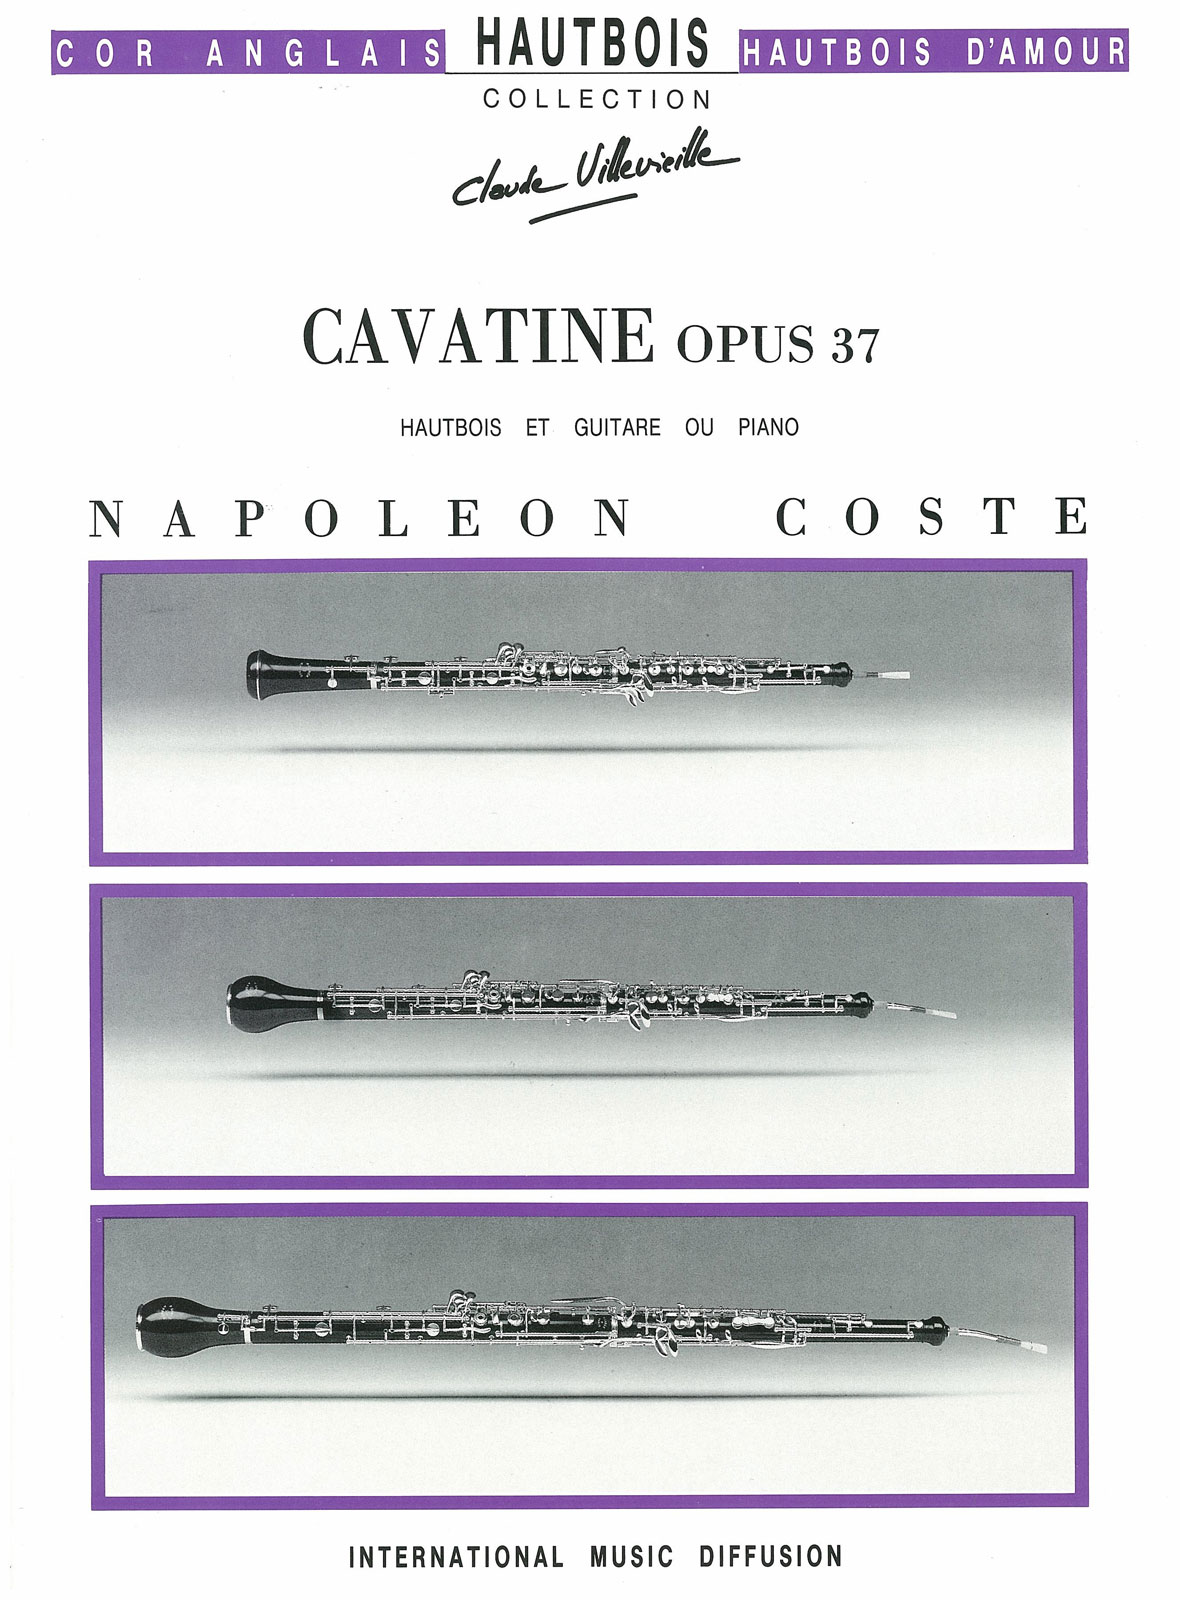 IMD ARPEGES COSTE - CAVATINE OP 37 - HAUTBOIS & GUITARE OU PIANO